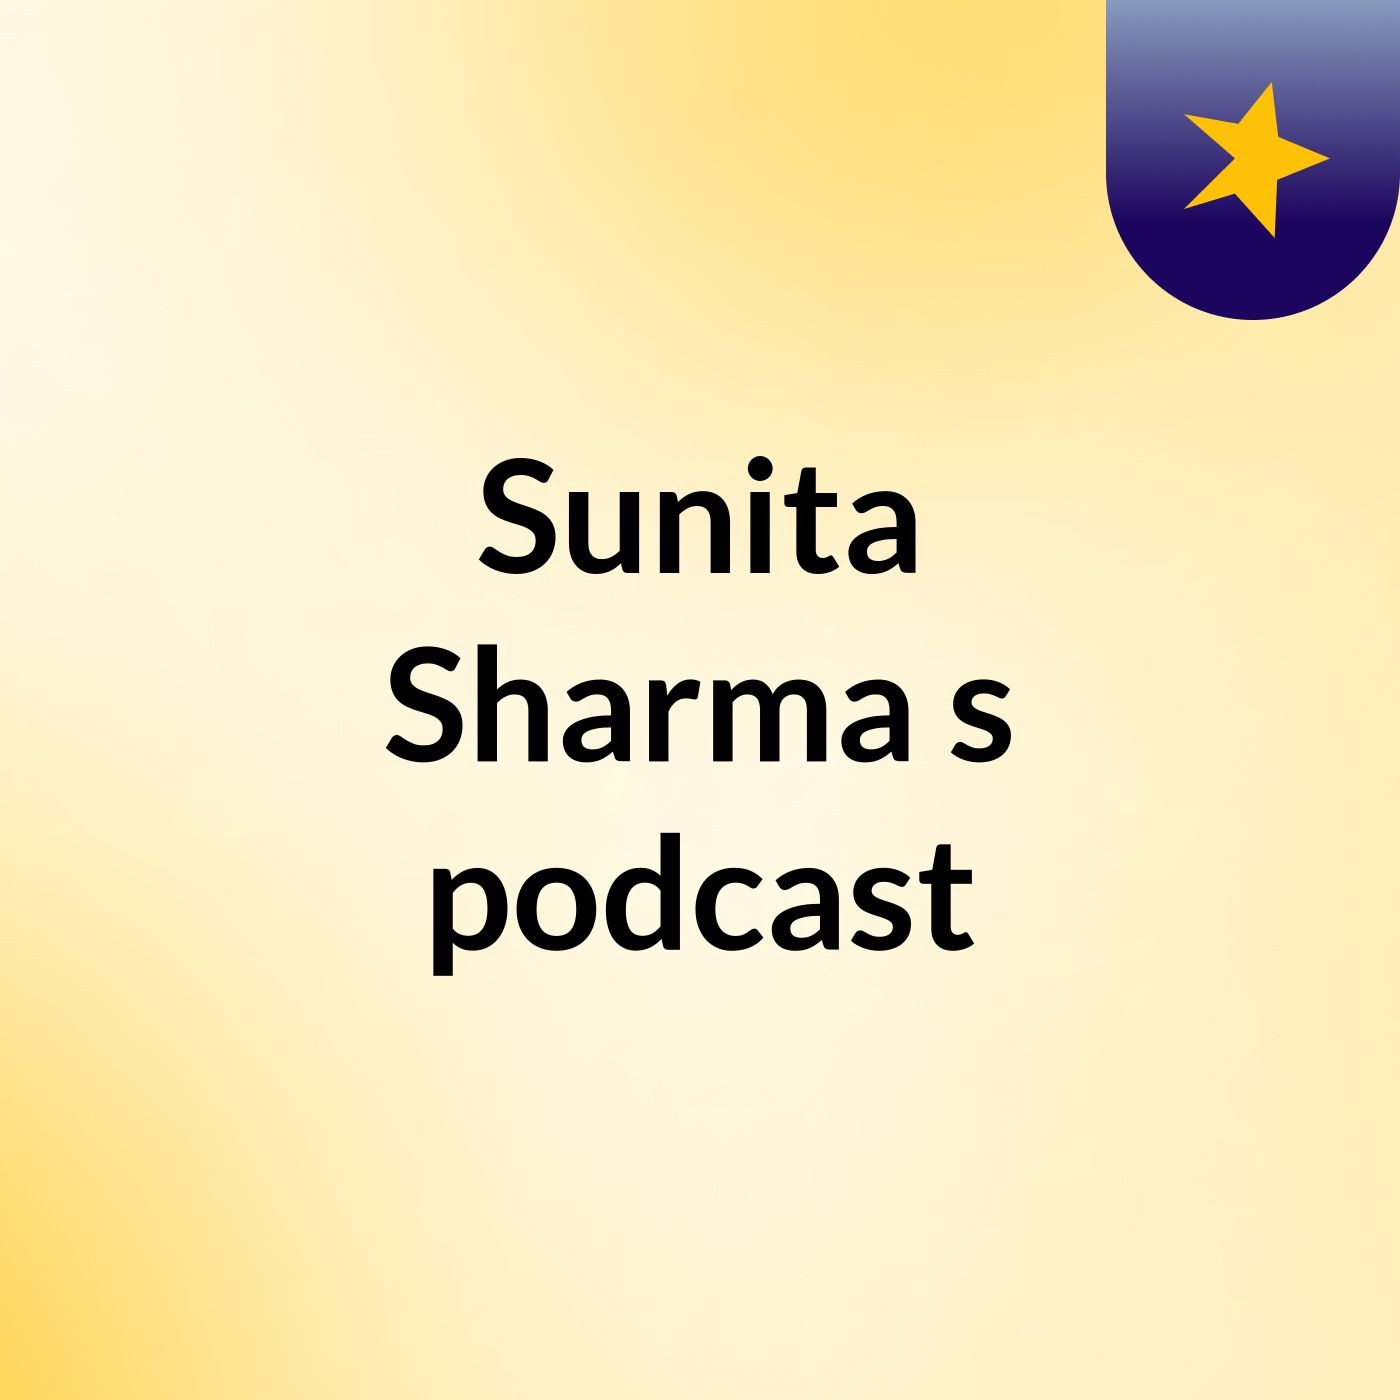 Episode 4 - Sunita Sharma's podcast